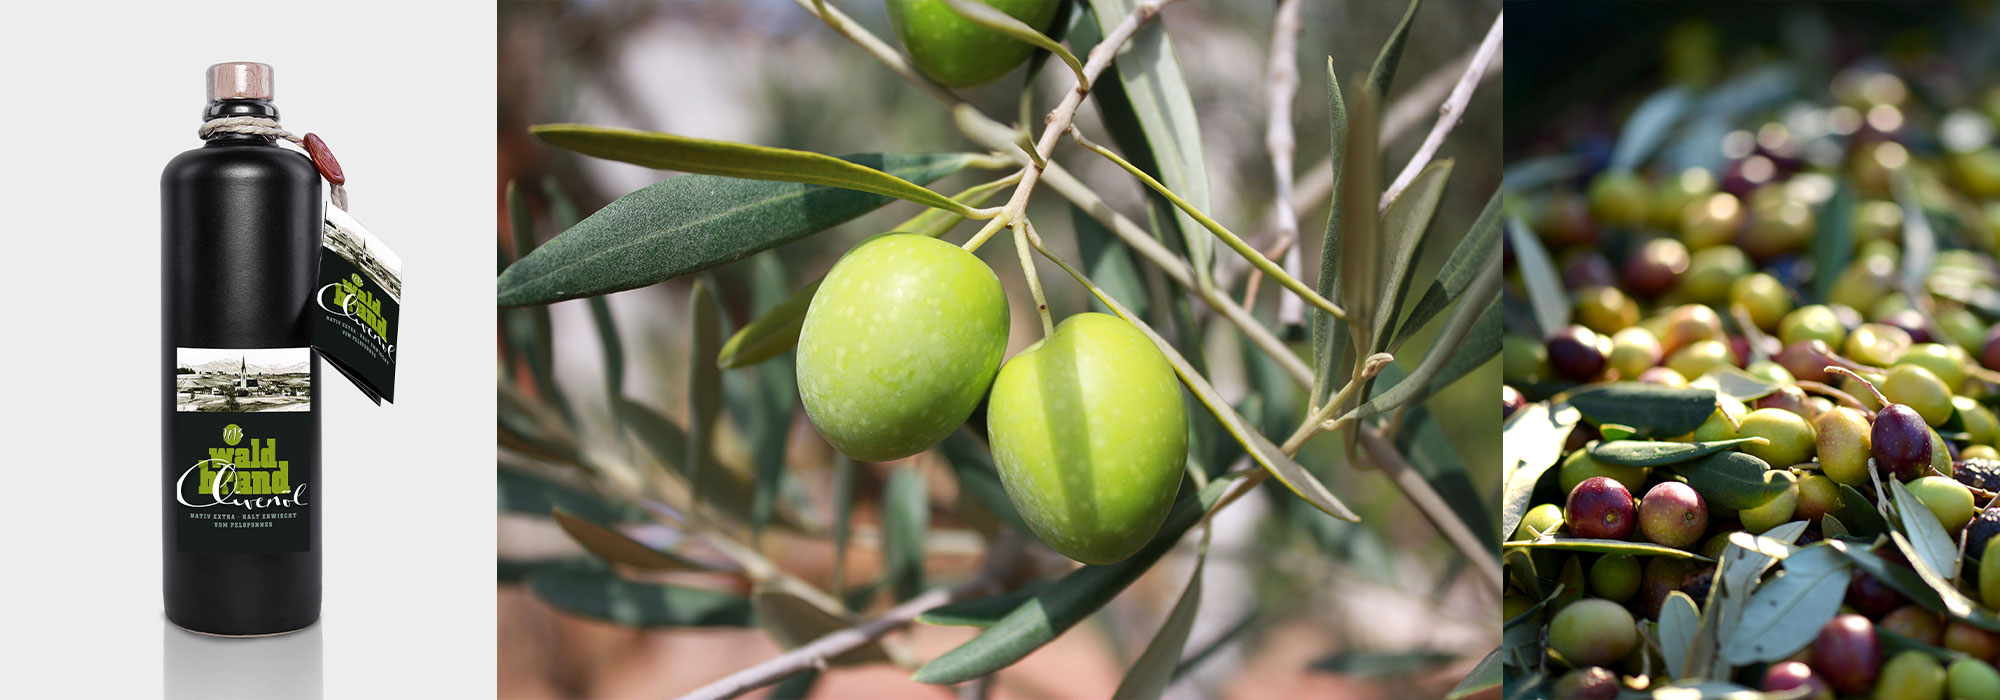 Waldbrand Olivenöl